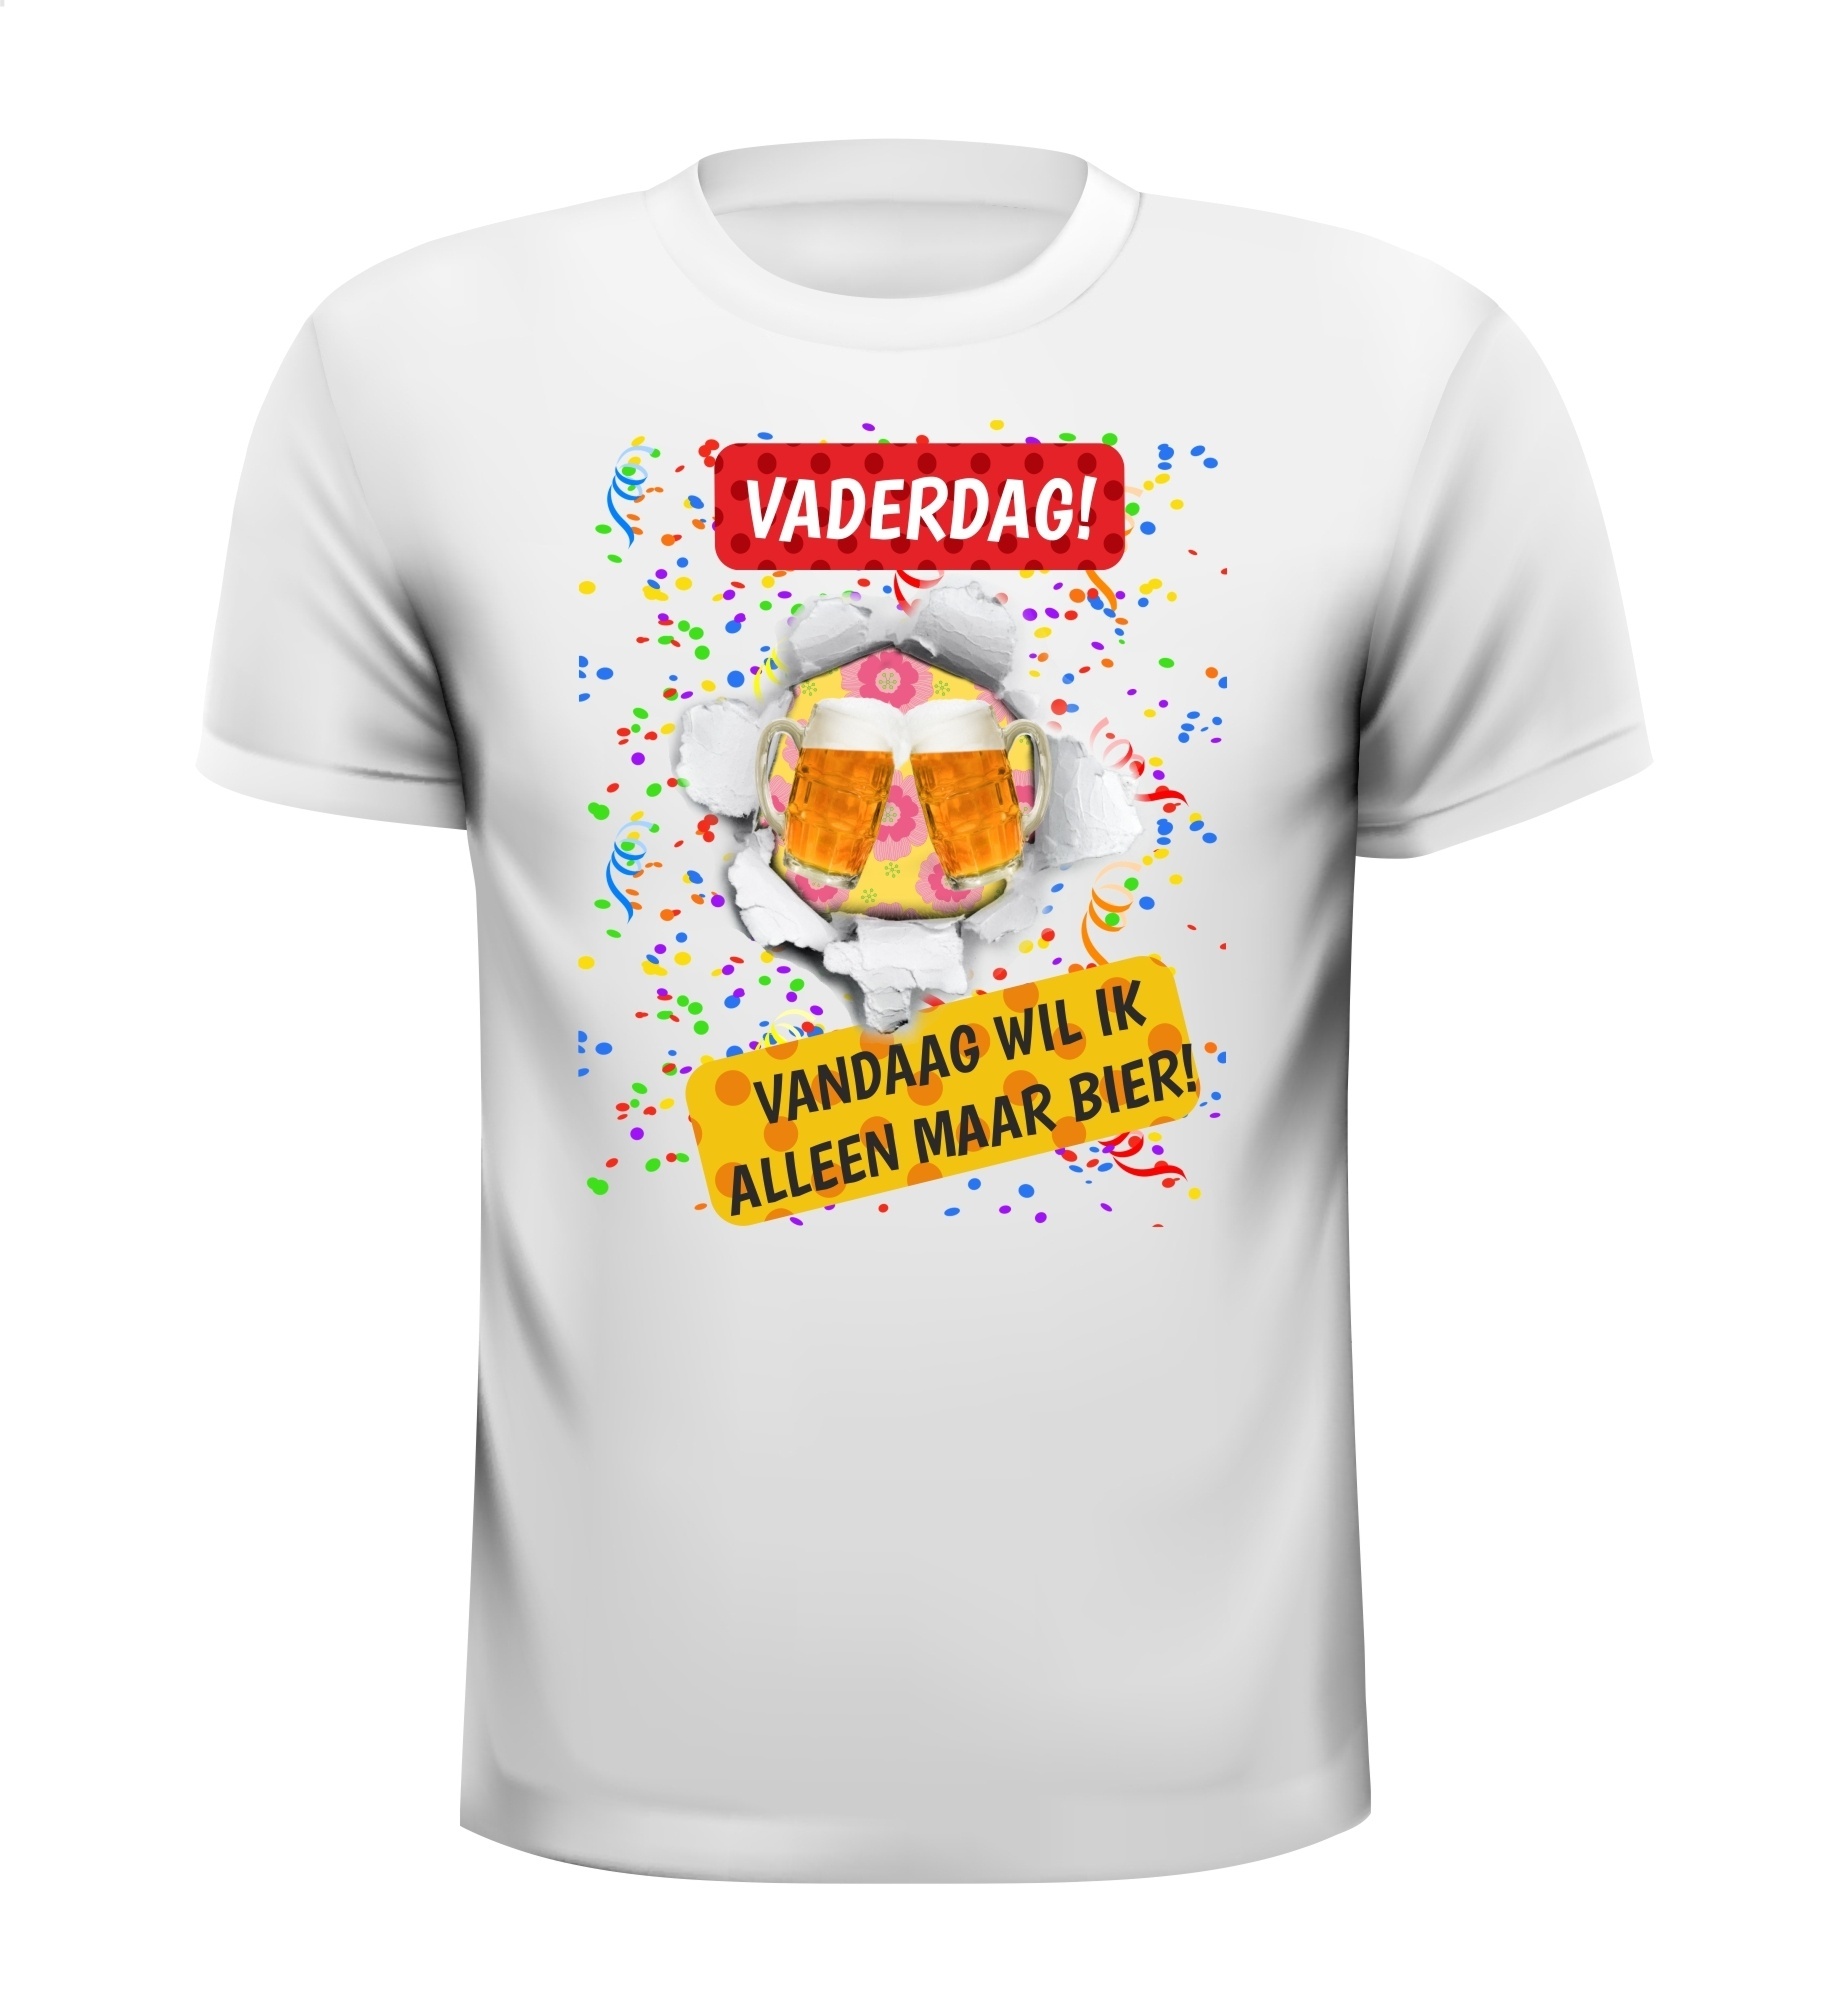 Vaderdag T-shirt Vandaag wil ik alleen maar bier!